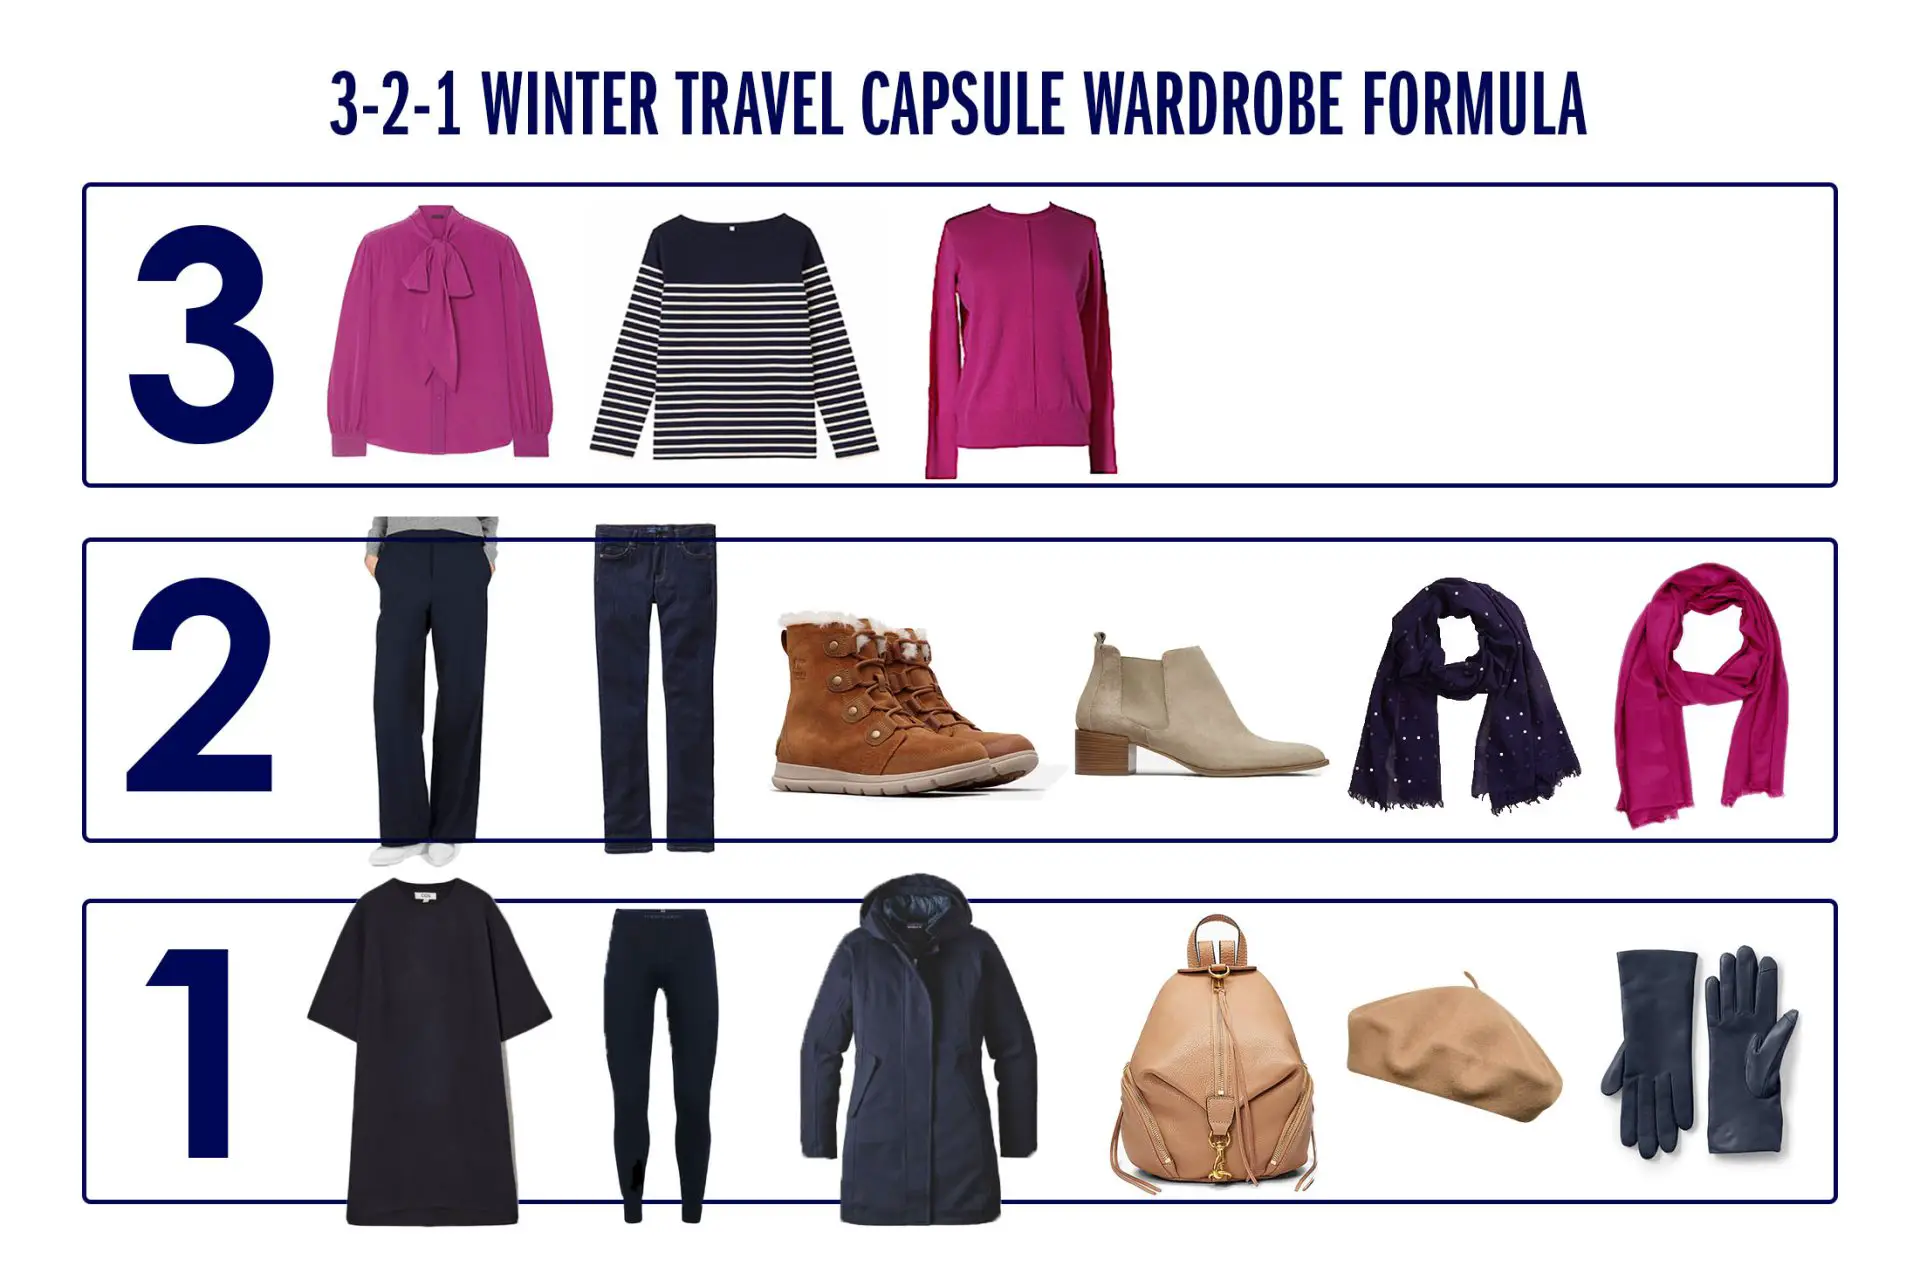 Winter Travel 3-2-1 Capsule Wardrobe Formula in images